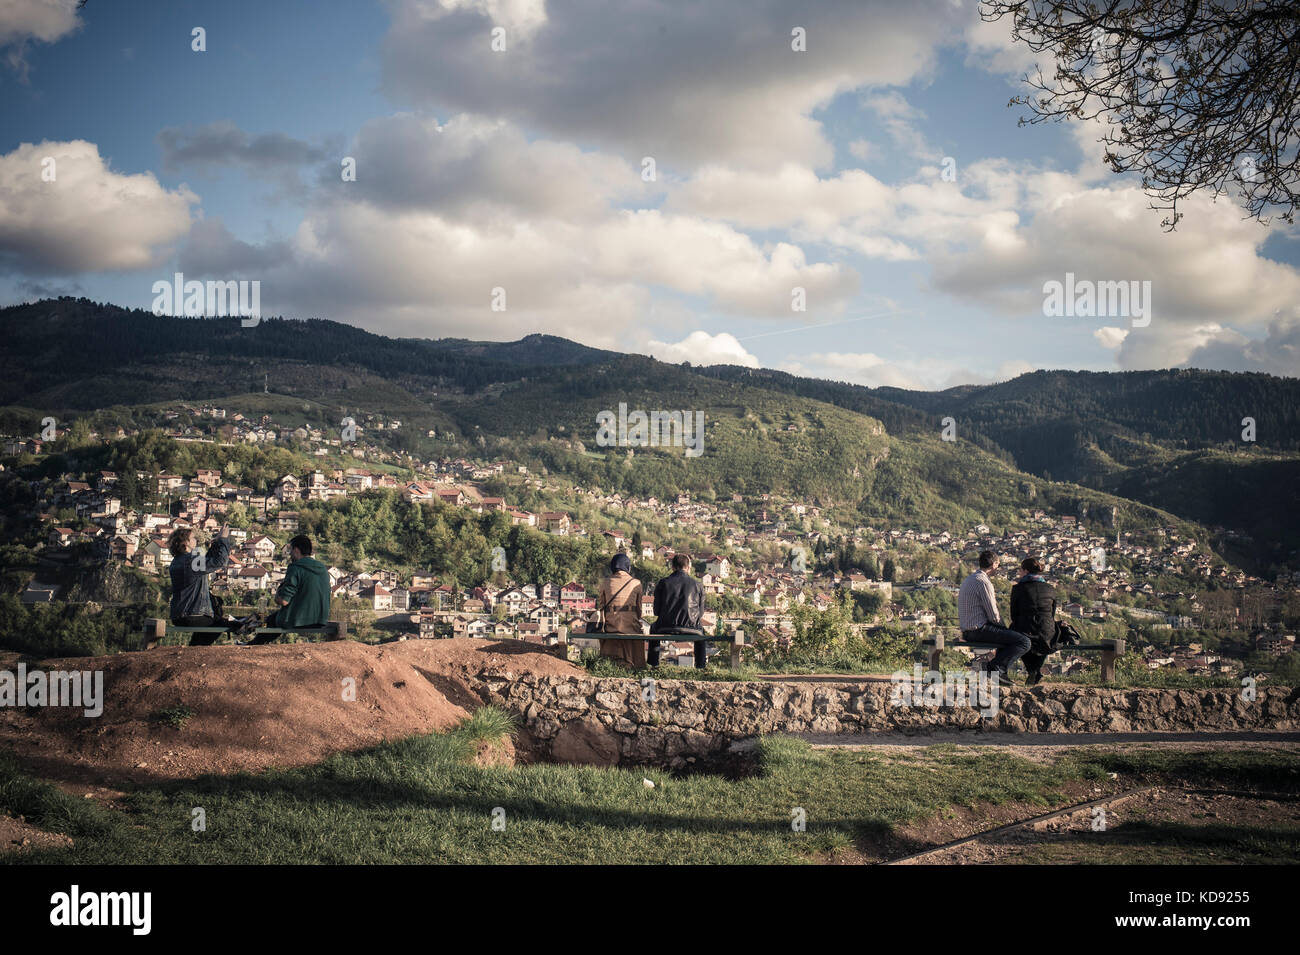 Des Sarajéviens sur la colline de Zuta tabja. Les amoureux et les jeunes s'y retrouvent. Sarajevo mai 2015. People from Sarajevo on the Zuta tabja hil Stock Photo